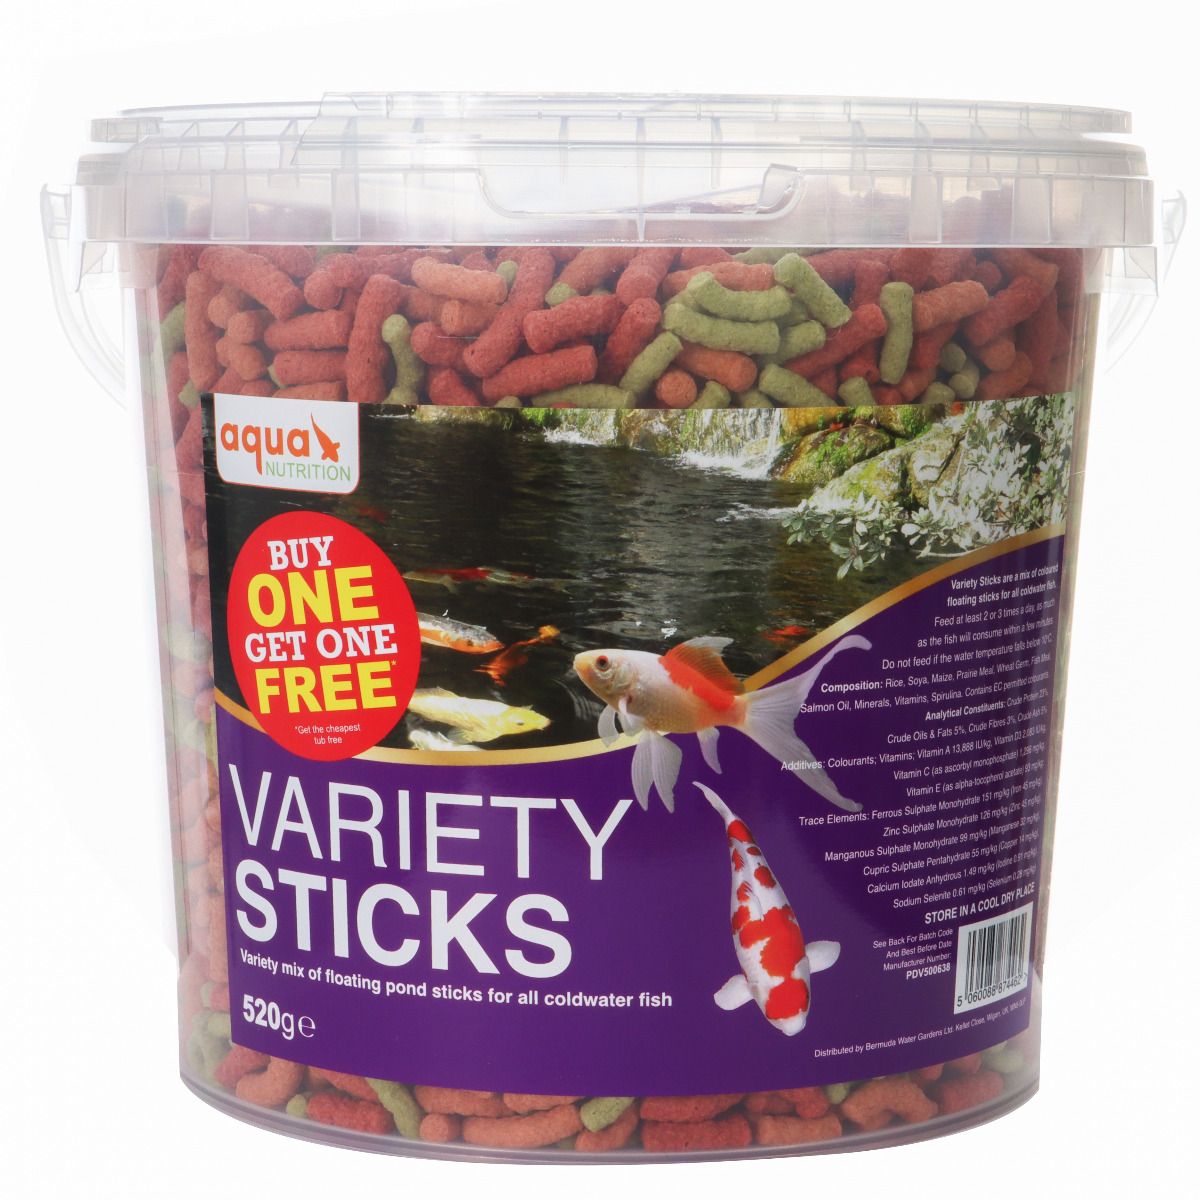 Aqua Nutrition Variety Sticks (520g) - Buy One Get One Free